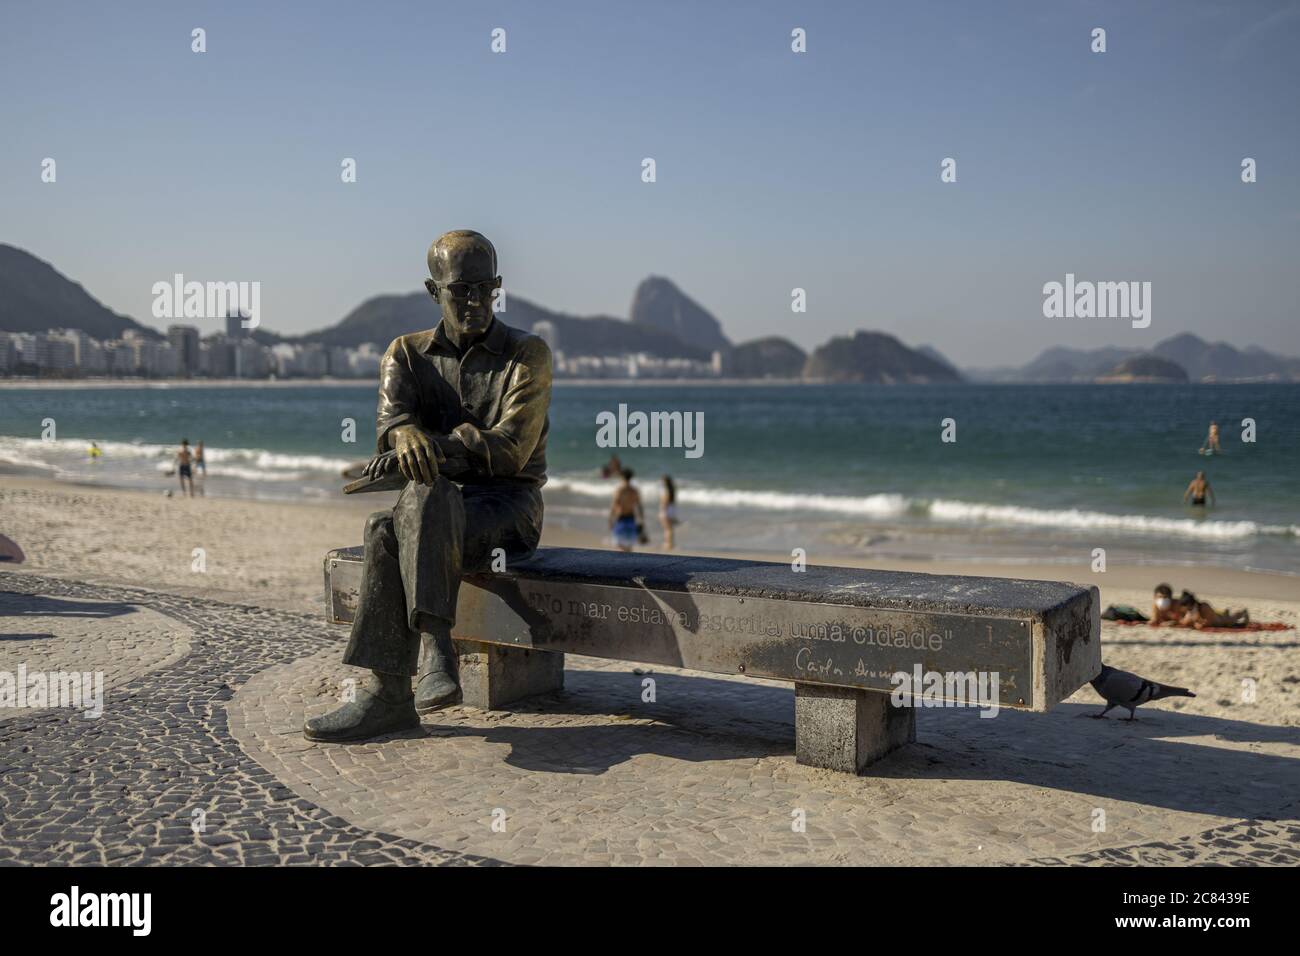 RIO DE JANEIRO, BRAZIL - Jul 12, 2020: Statue of Brazilian poet Carlos Drummond de Andrade on a Copacabana bench with quote 'In the ocean a city was w Stock Photo